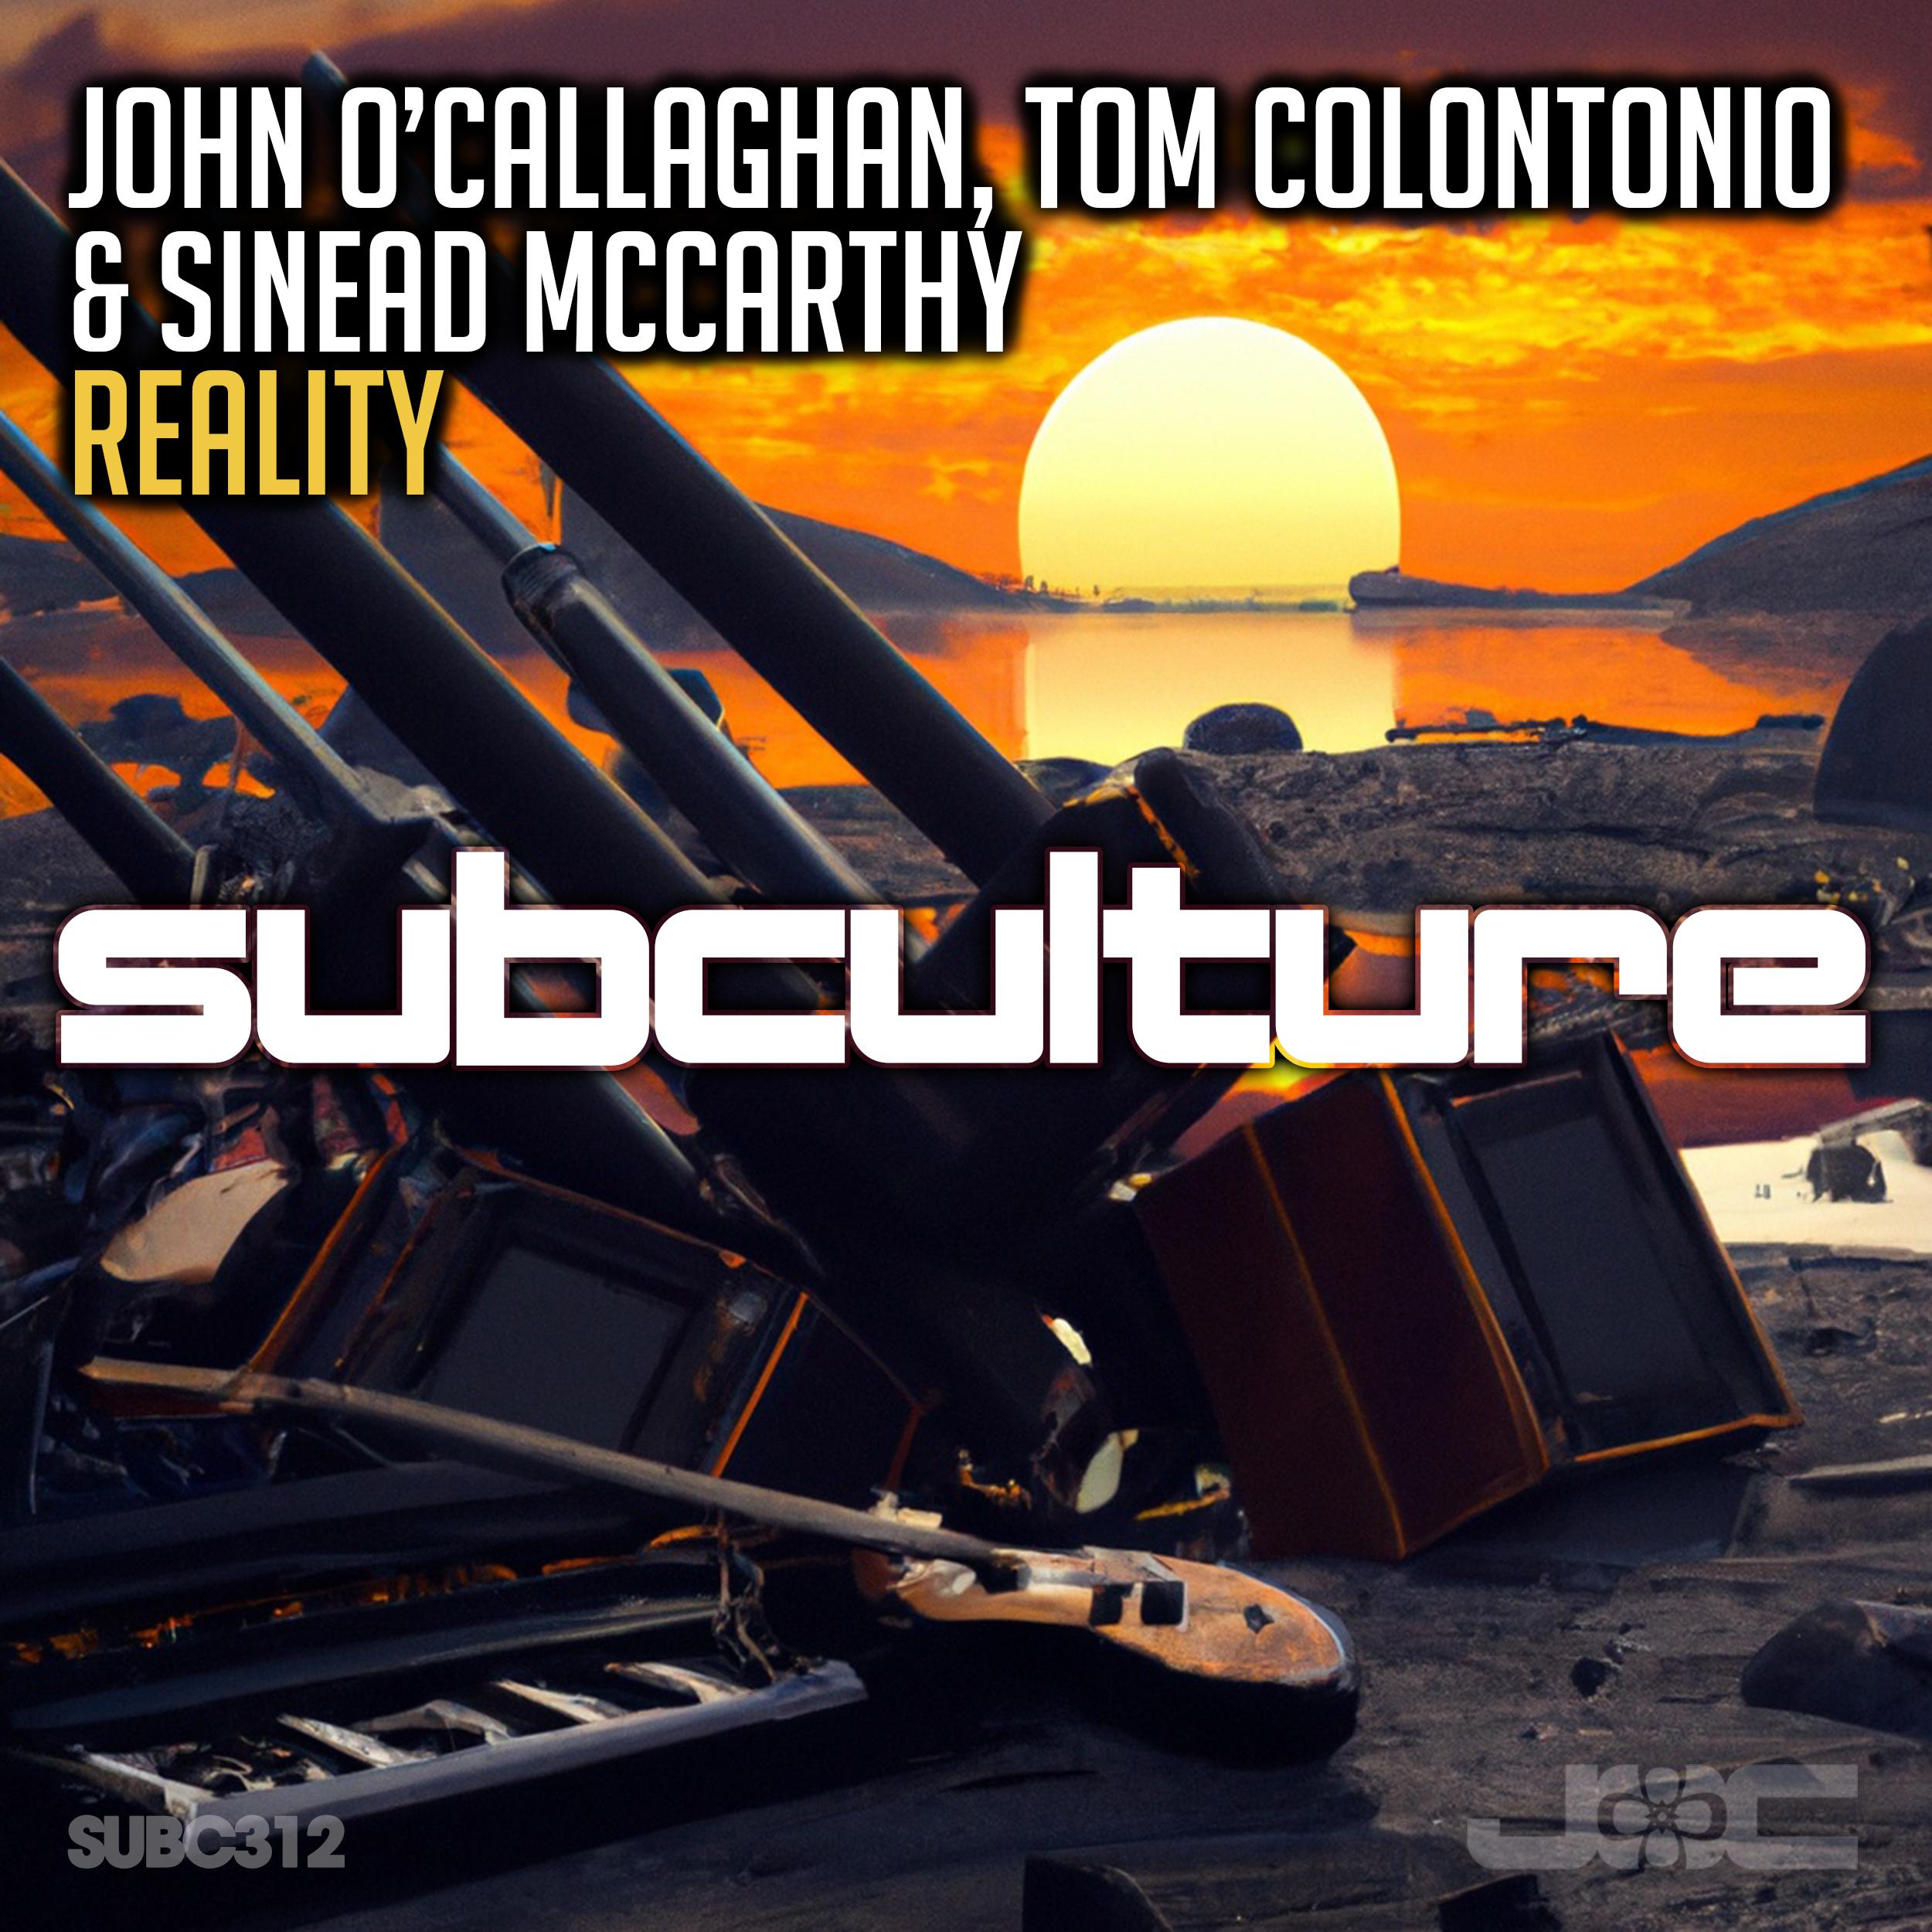 John O'Callaghan - Reality (Lo-Fi Mix)